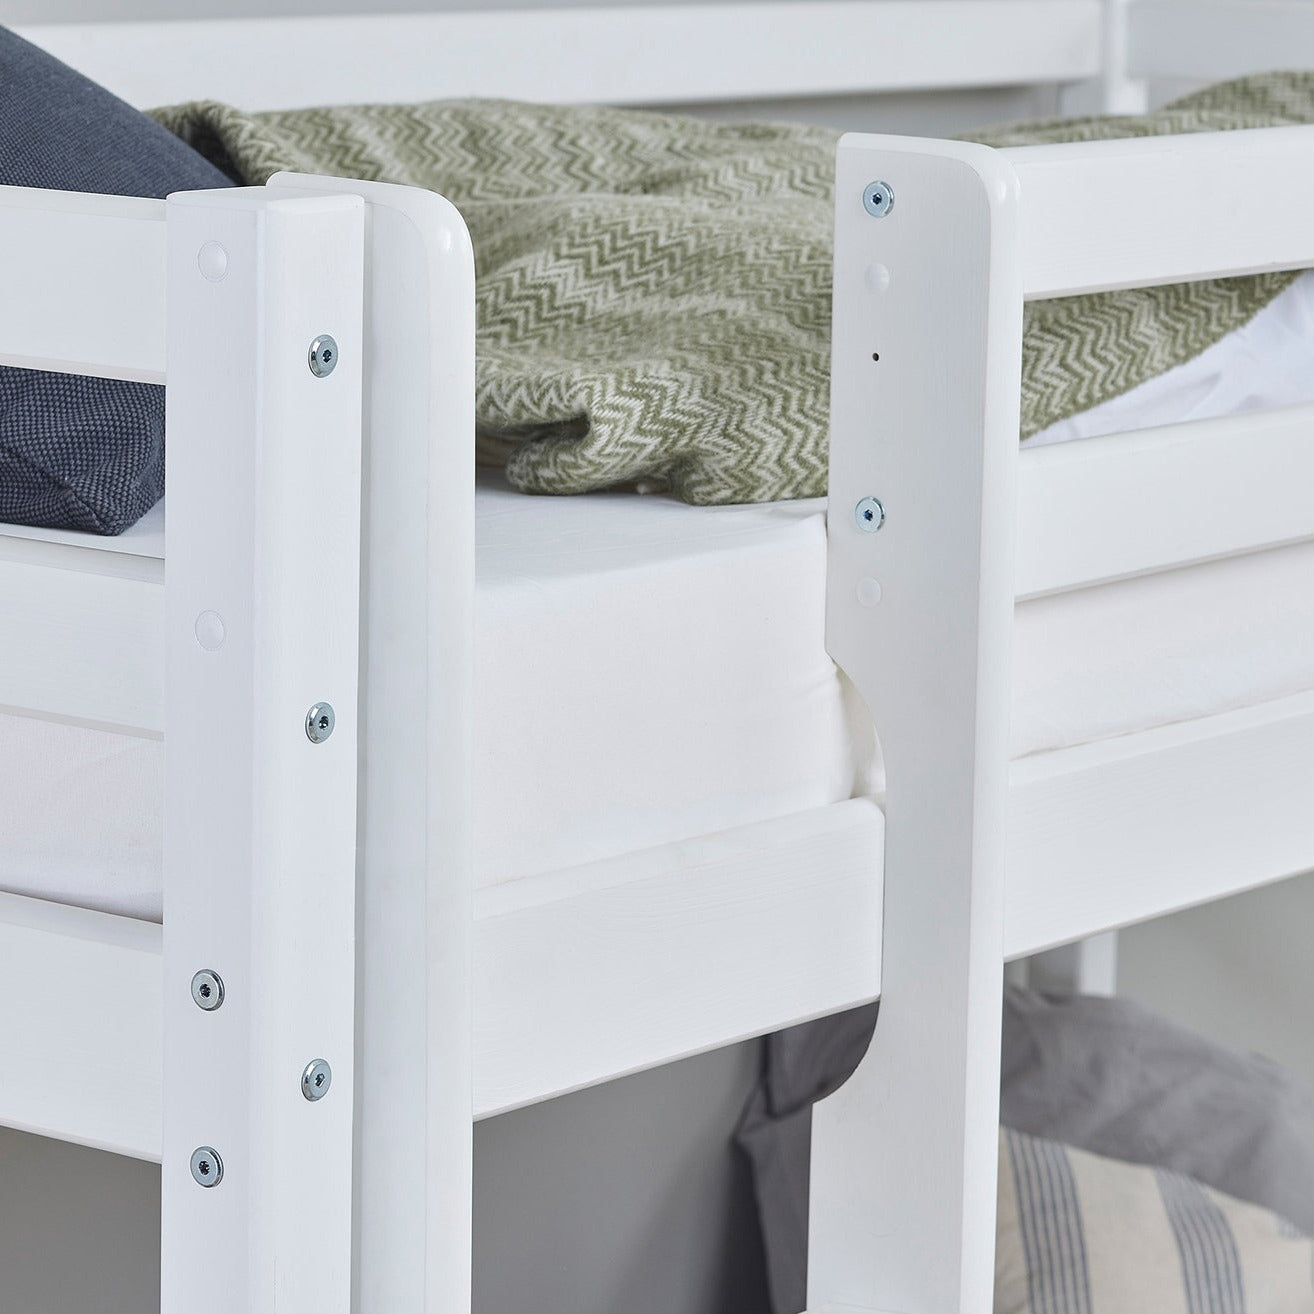 Hoppekids Eco Dream Bunk Bed - 90 x 200 cm - White